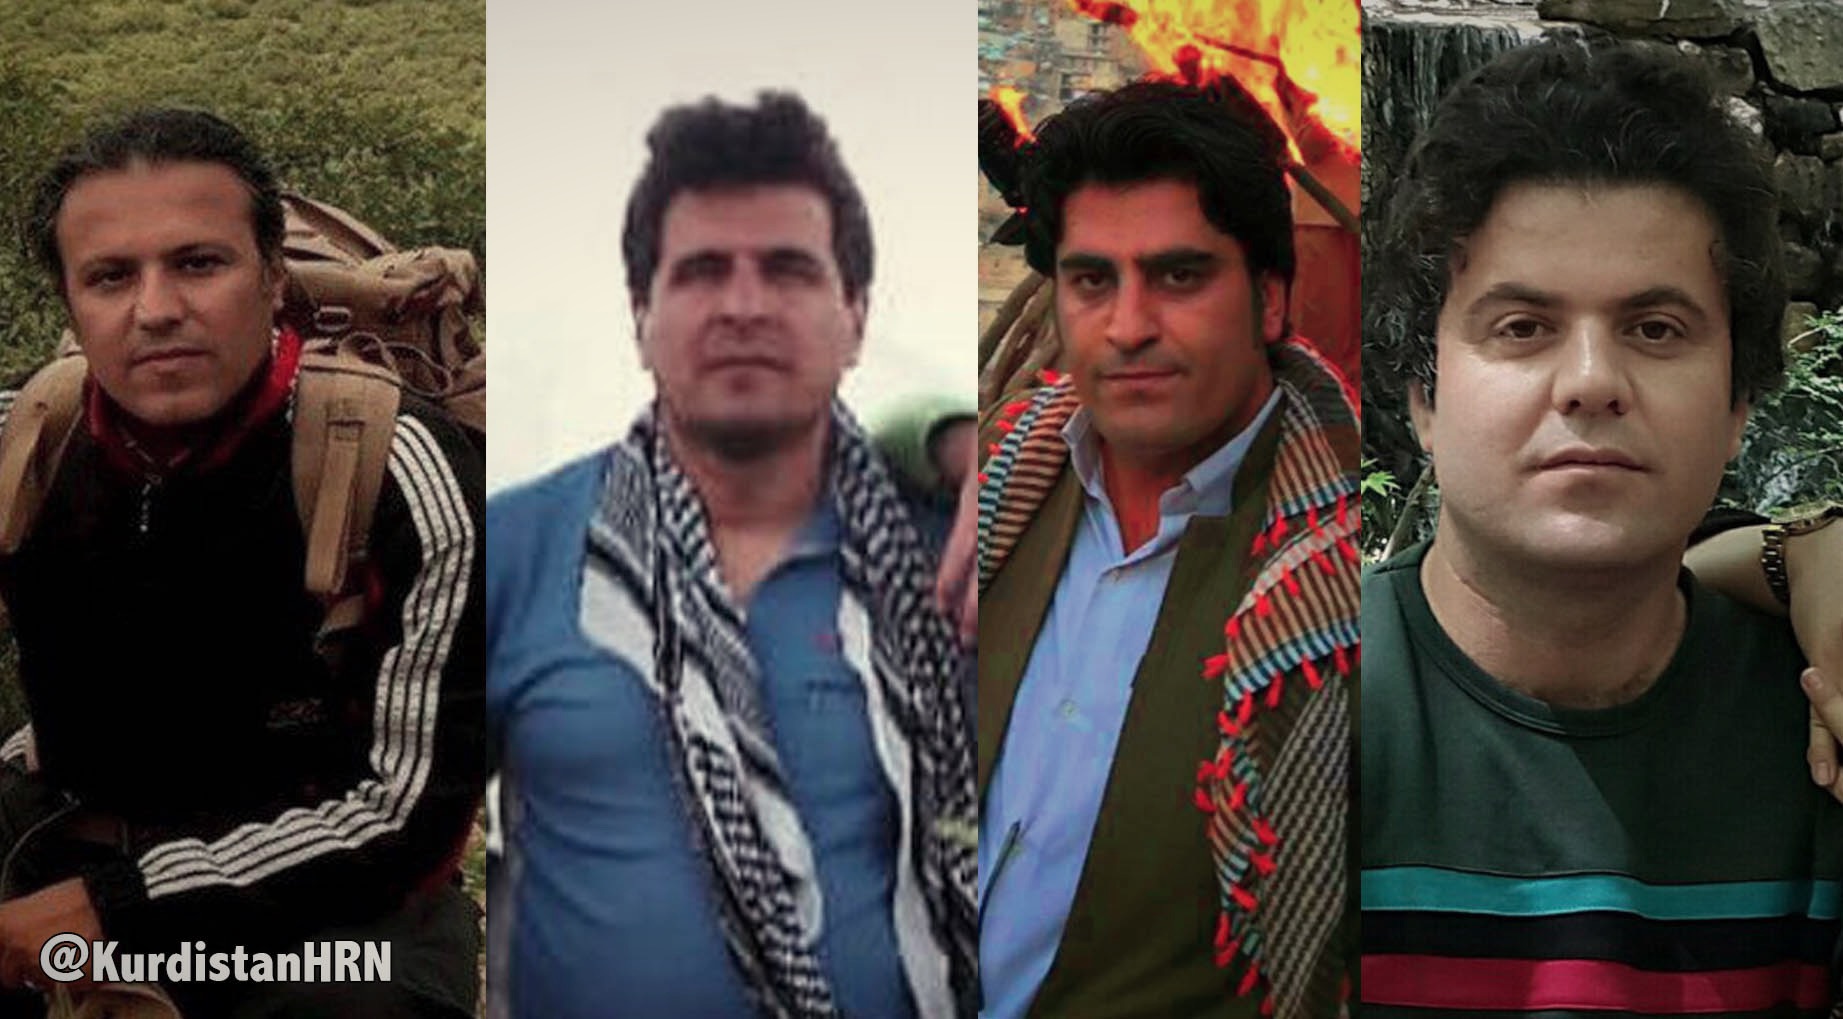 Edris Mehdizadeh, Khabat Mozaffari, Farzin Movaffaghi, Hesam Mehdizadeh